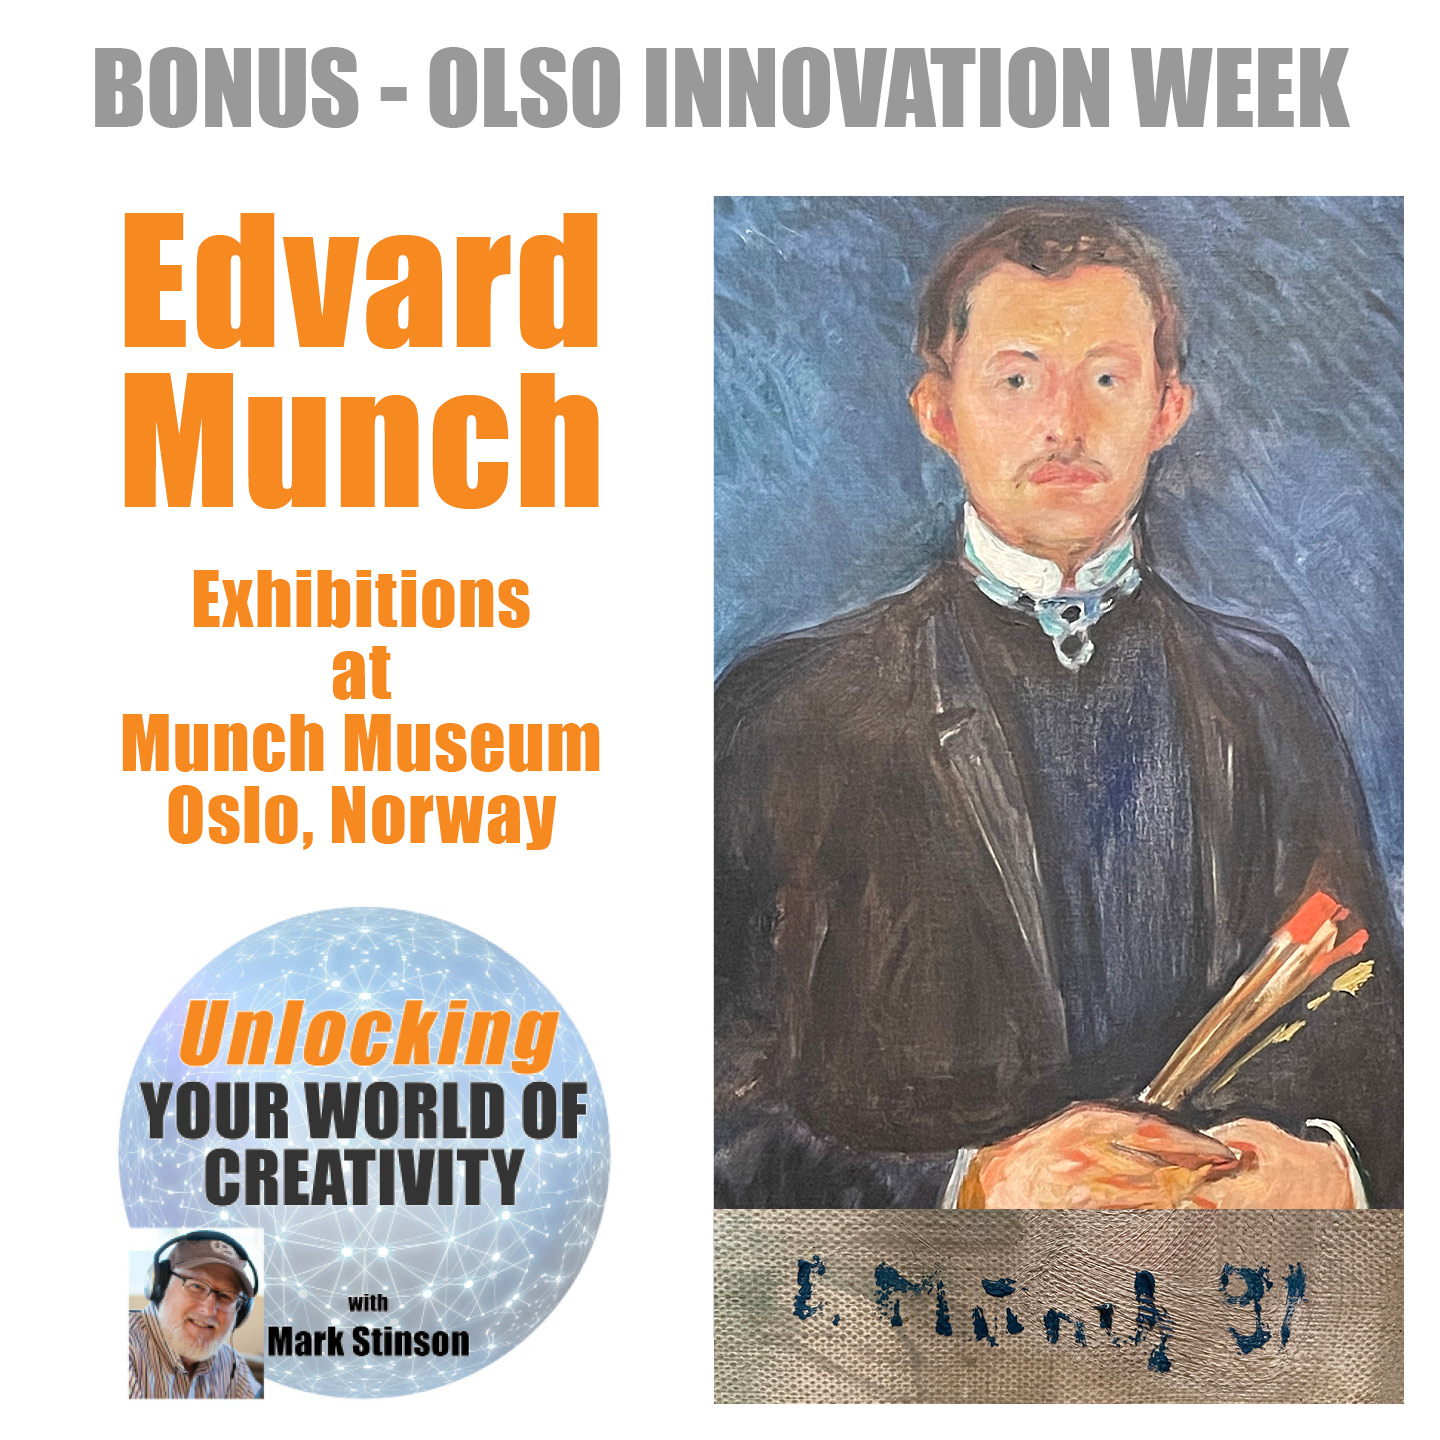 BONUS: Edvard Munch, exhibitions at Munch Museum Oslo Norway